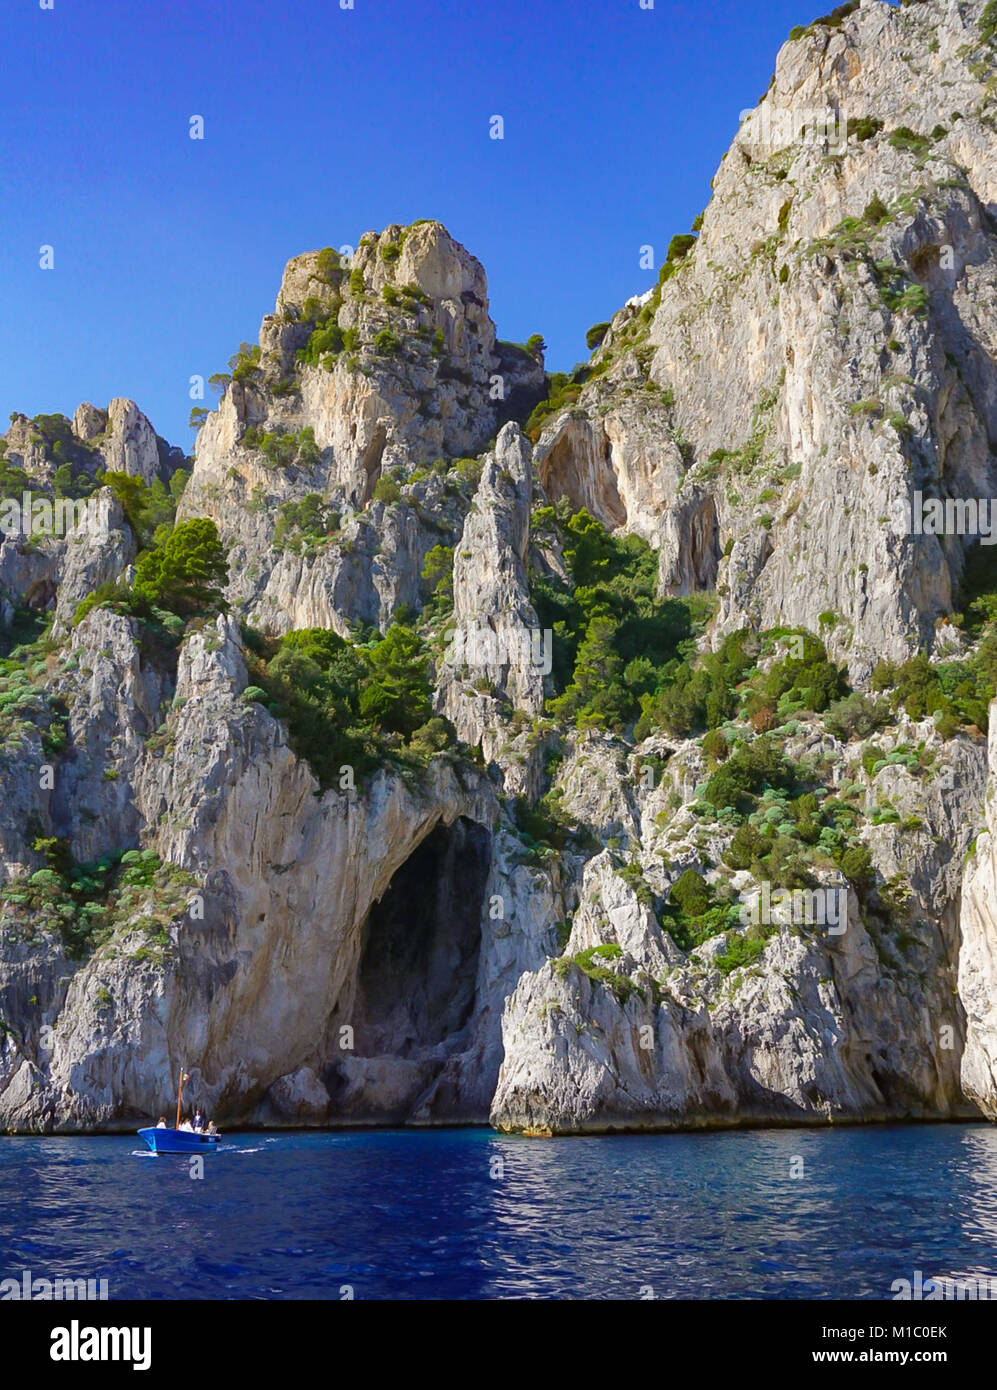 The White Grotto of the island of Capri, Italy.  Coastal Rocks on the island of Capri on the Tyrrhenian Sea. Stock Photo